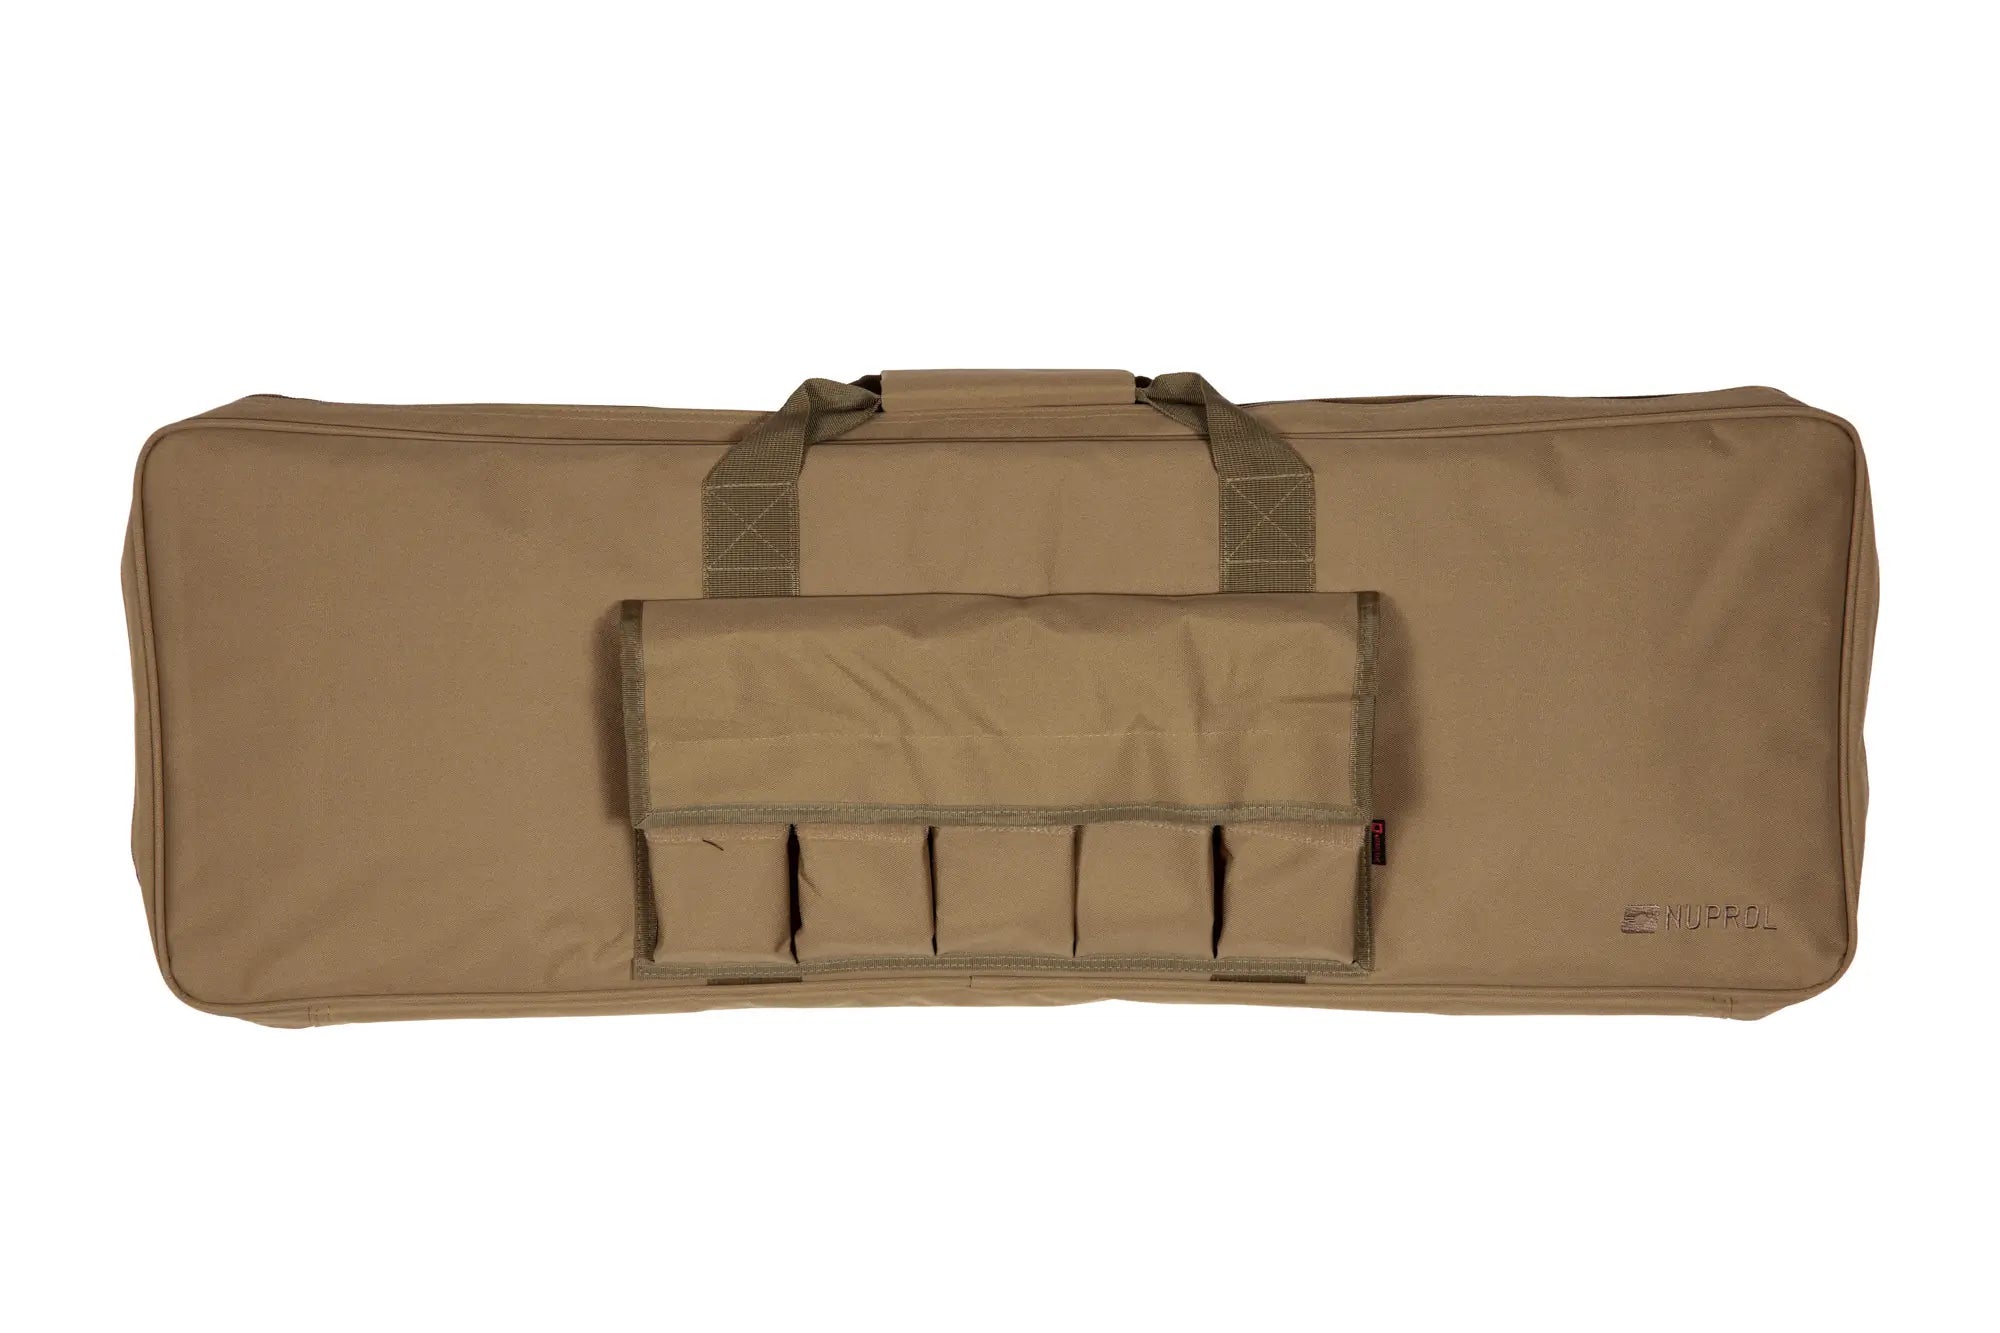 NSB Gun bag 910mm - Tan